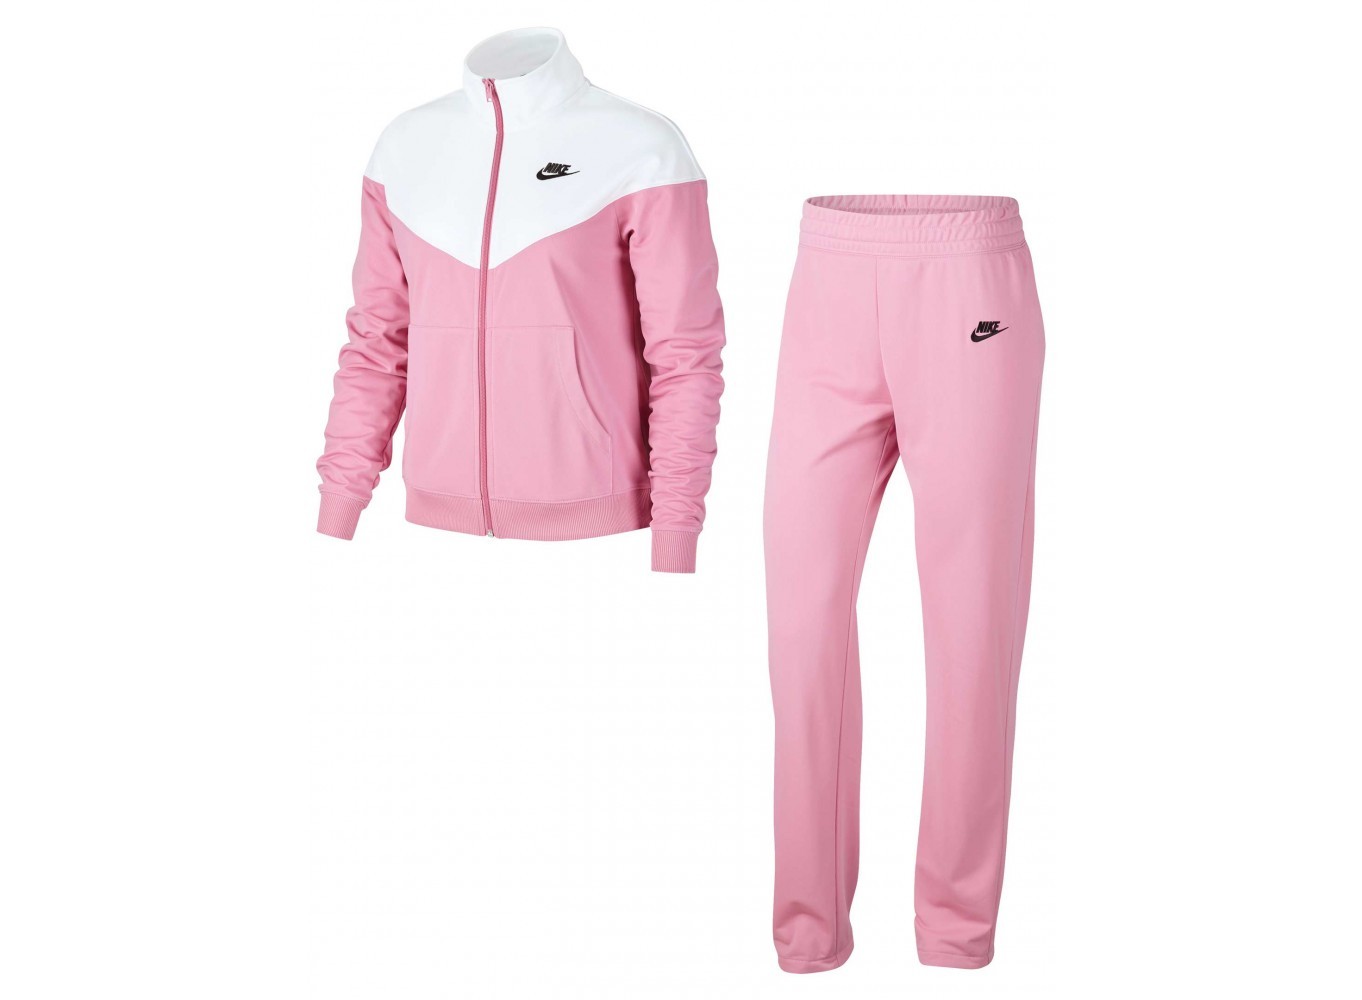 Del Sur Almeja Trivial Comprar Chandal NIKE: Chandal NIKE Sportwear Rosa blanco Mujer